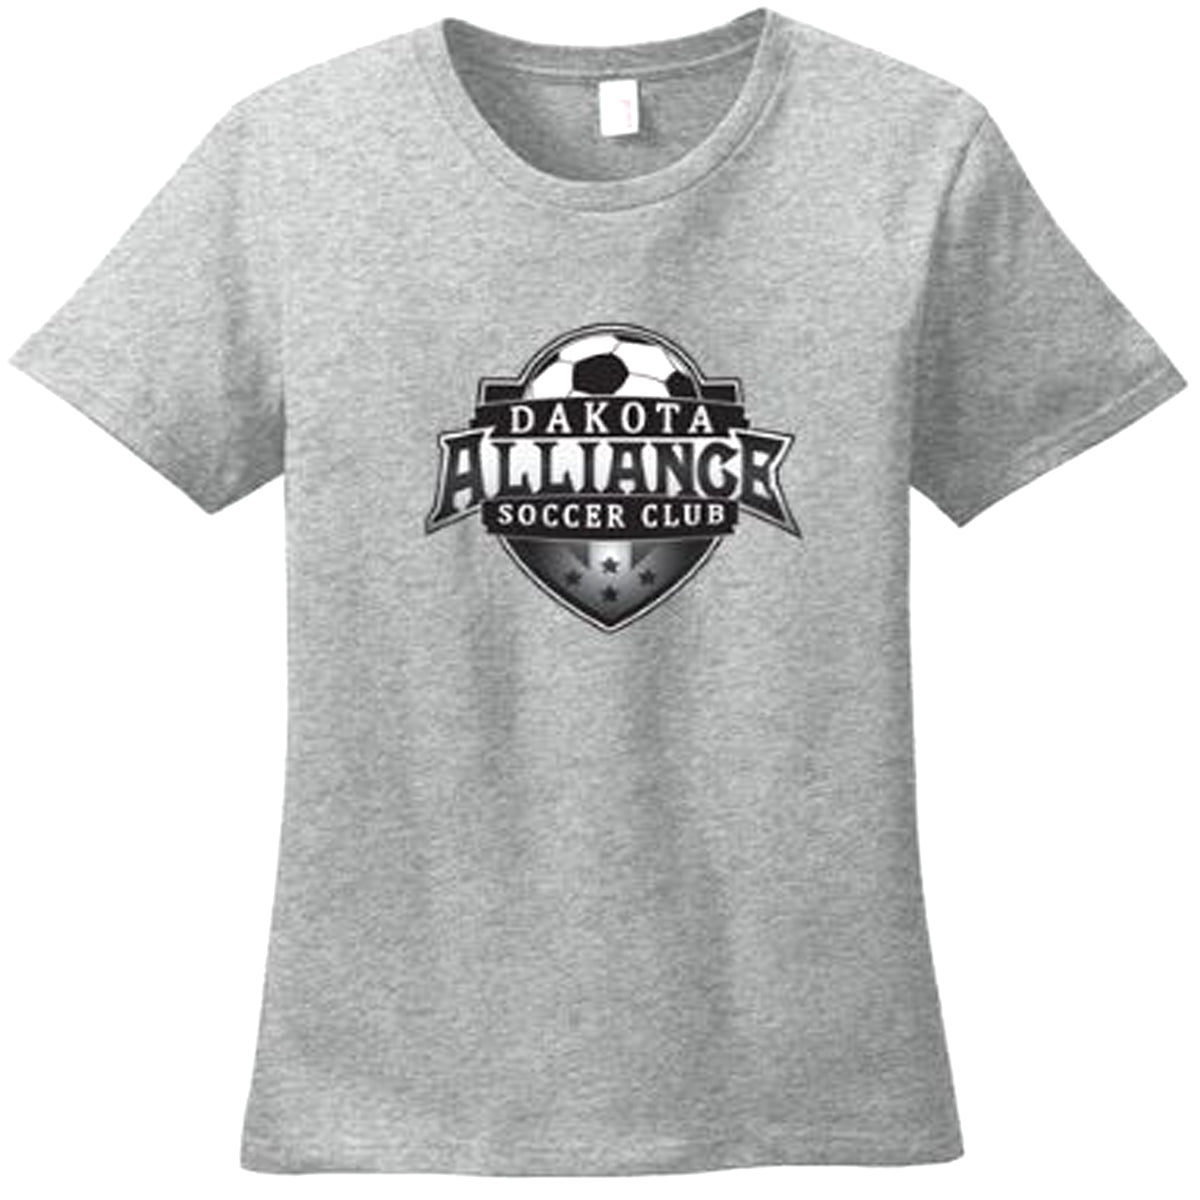 DASC Anvil Ladies 100% Combed Ring Spun Cotton T-Shirt Shirt anvil Ladies Small Sport Grey 